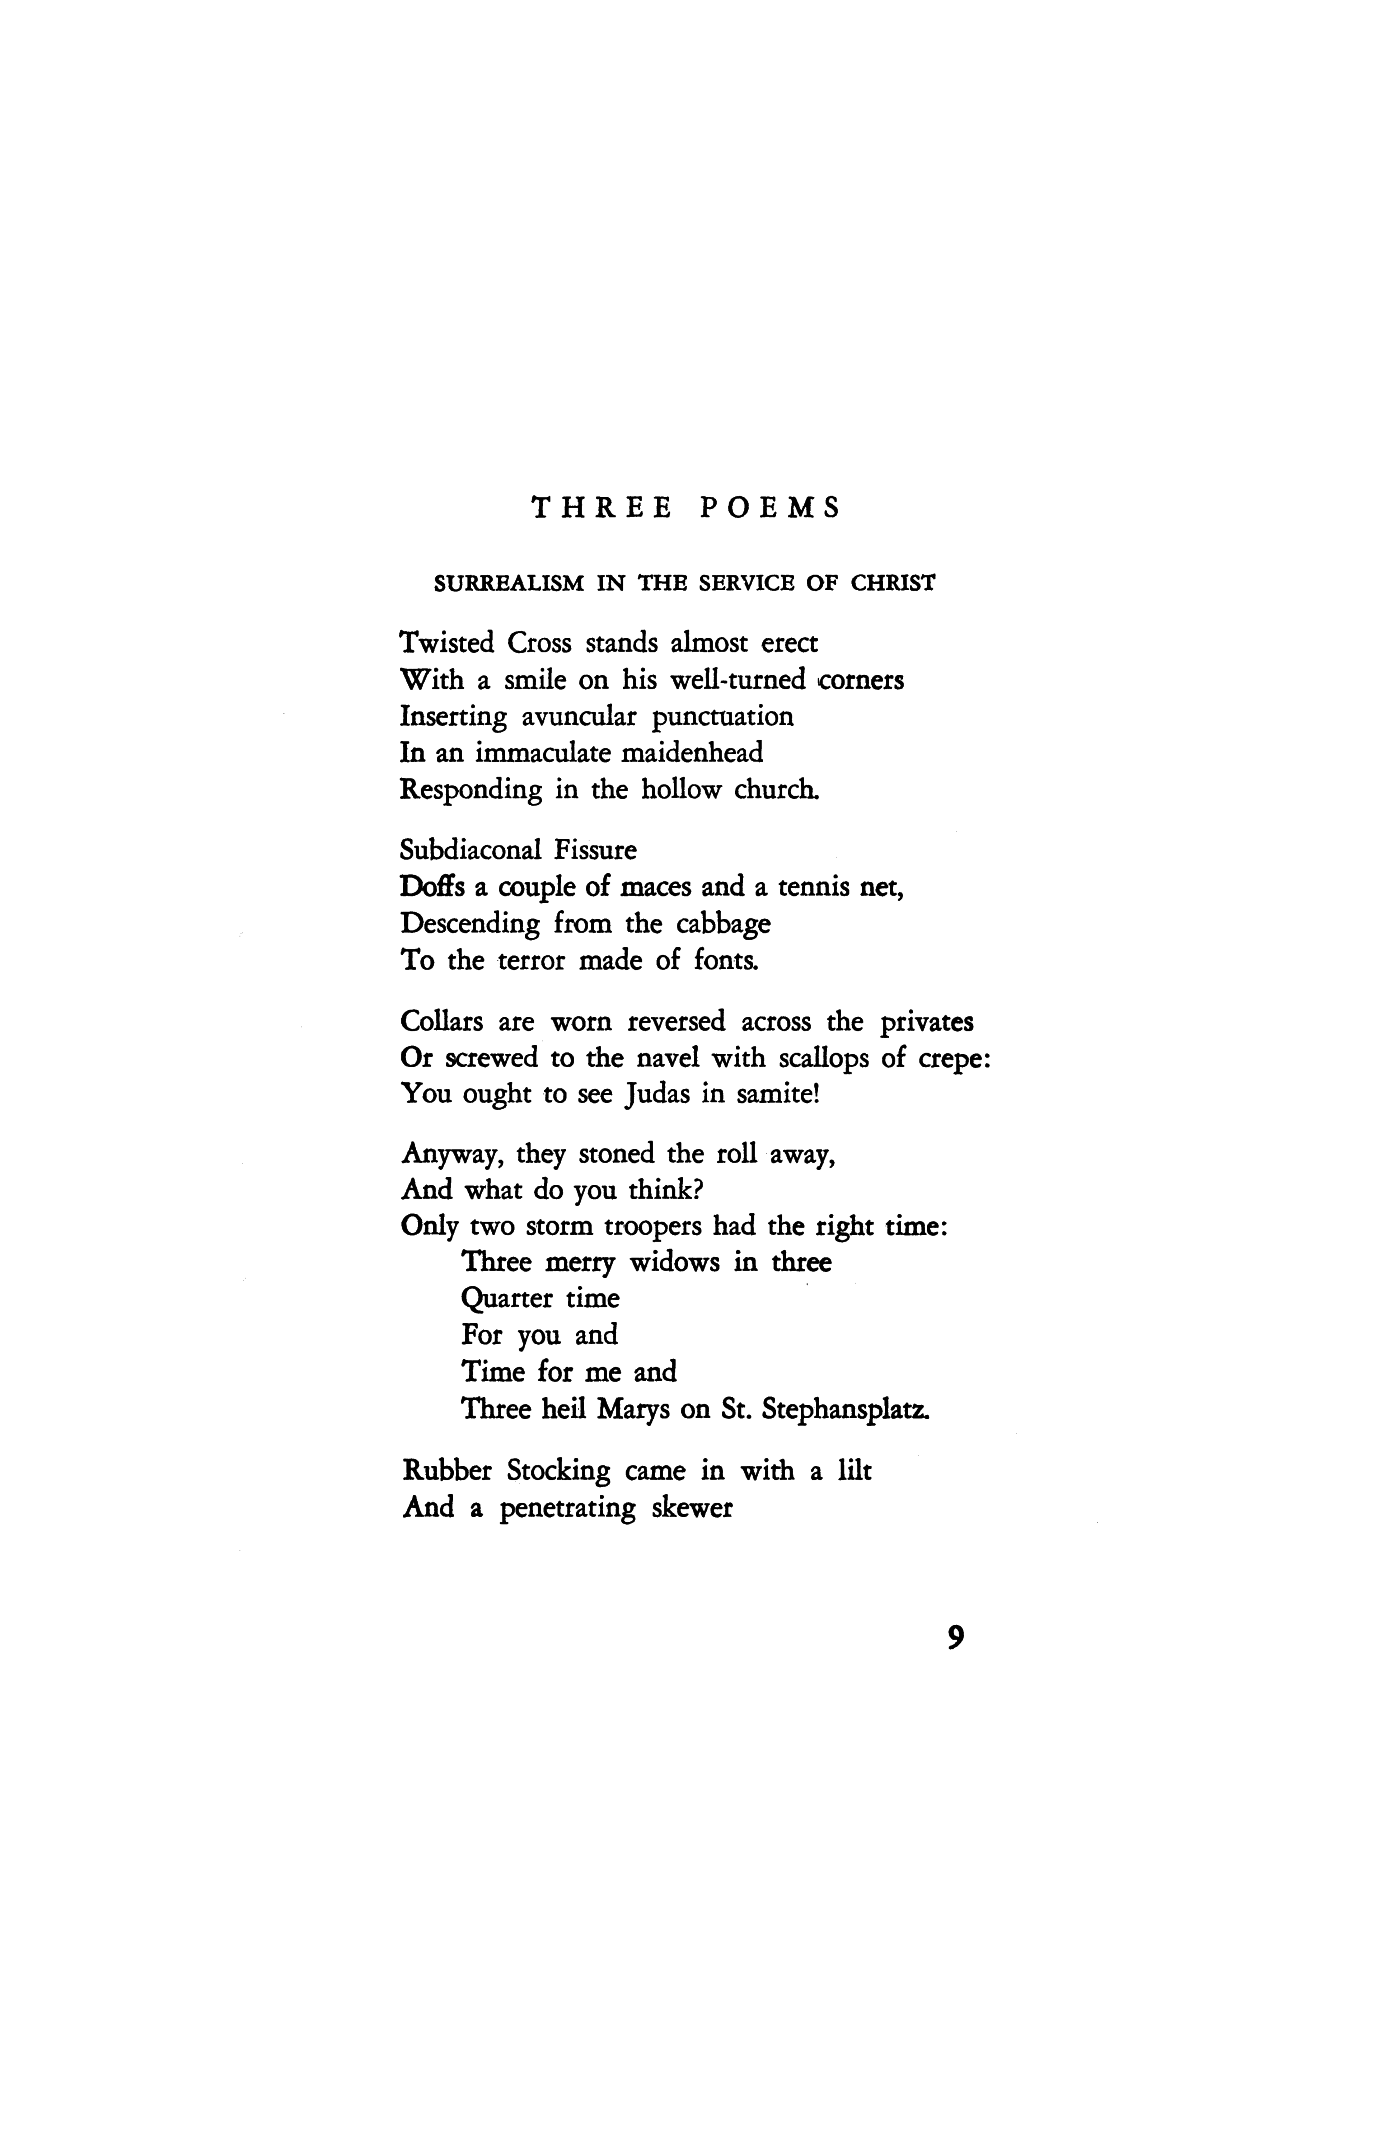 white stocking poem